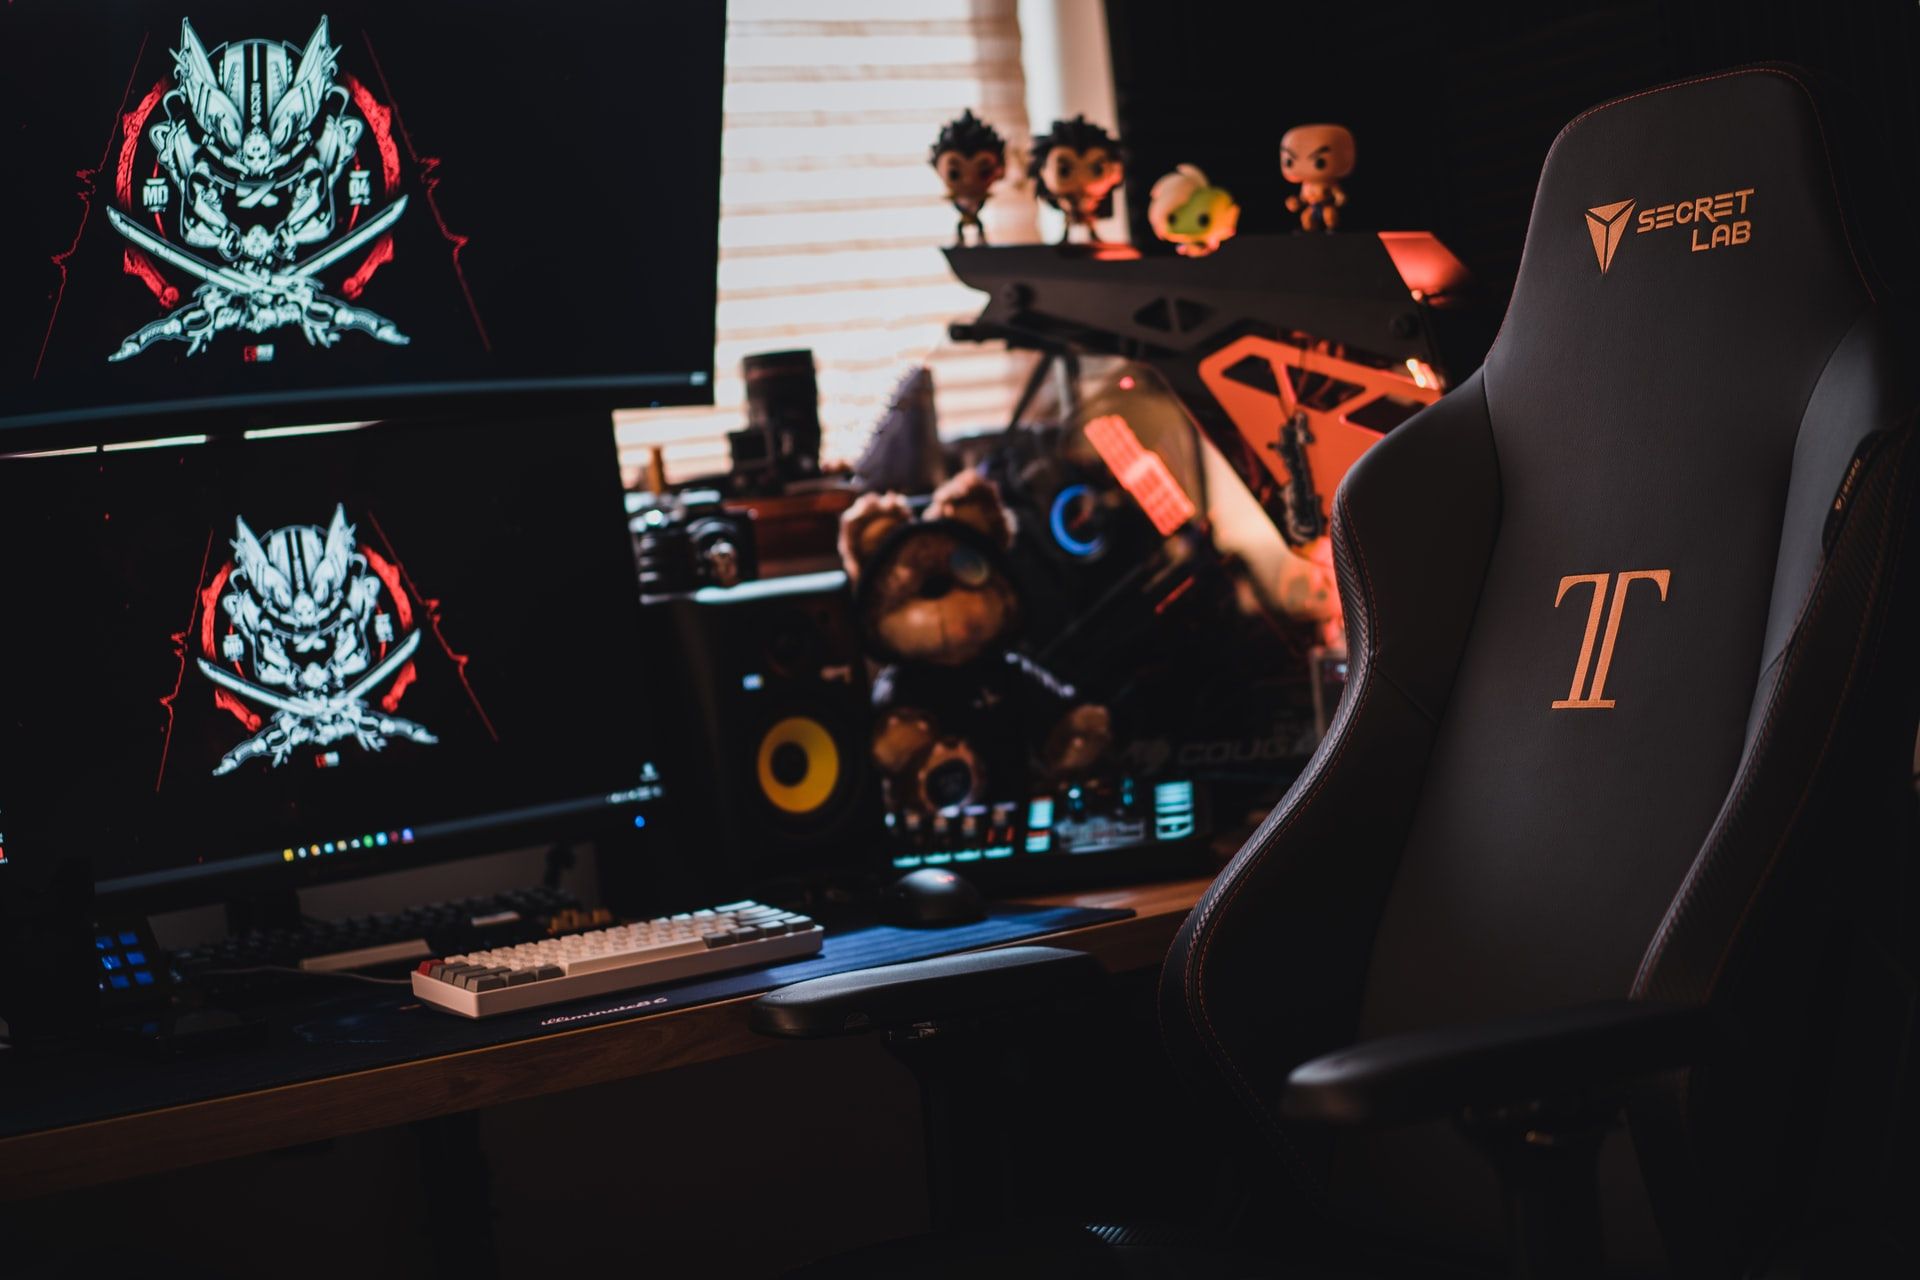 secretlab titan gaming chair in front of dual monitor pc desktop setup black and orange